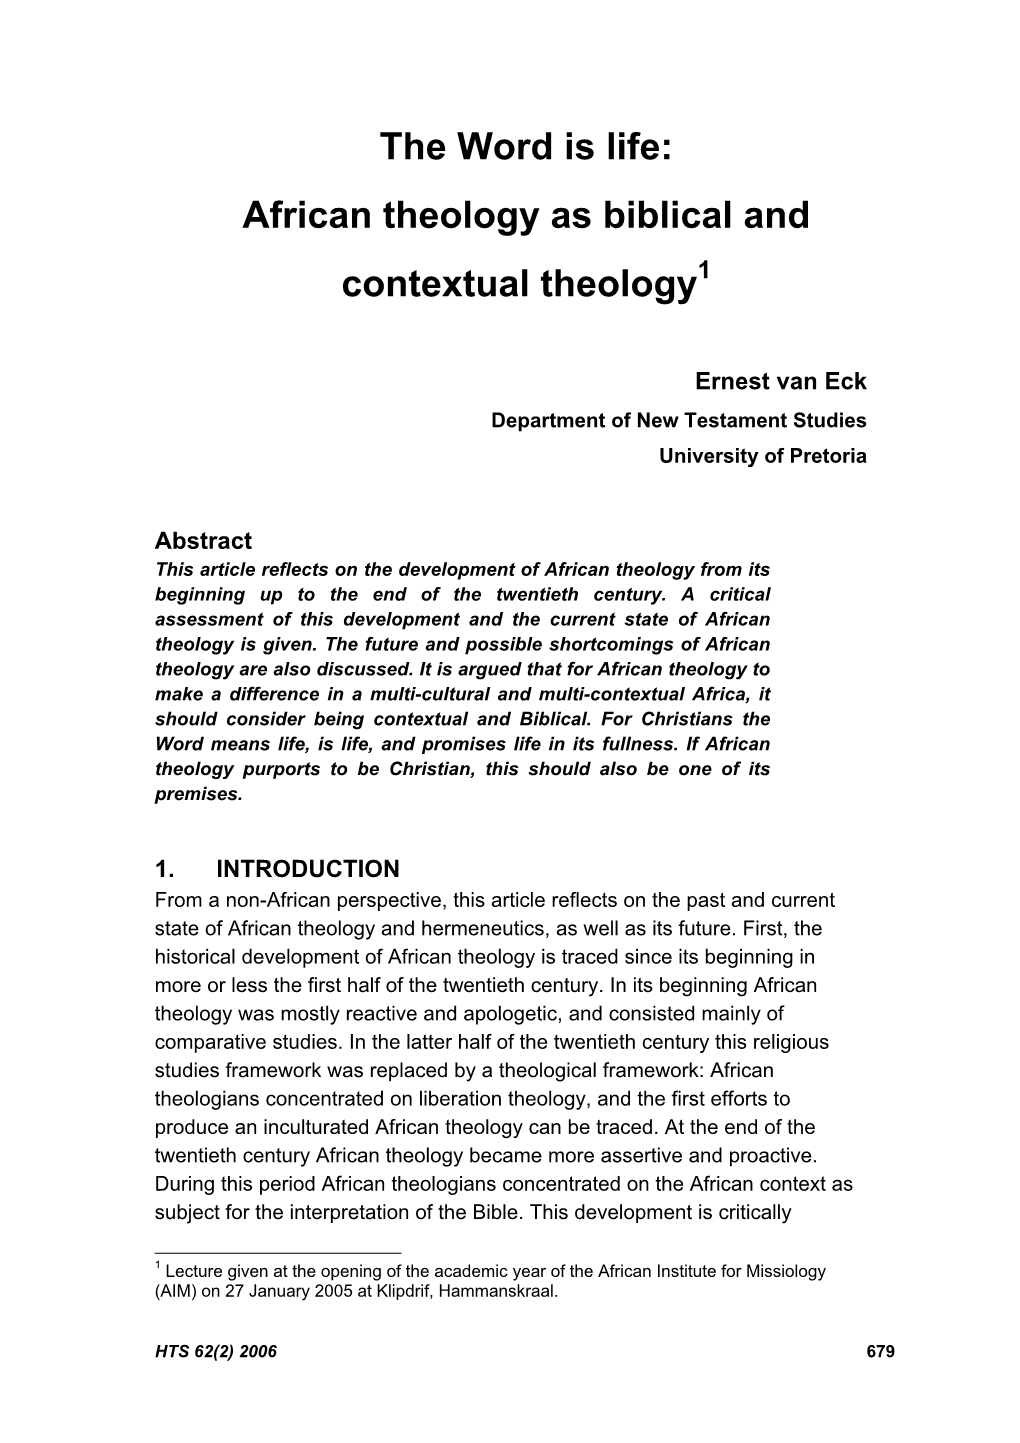 African Theology As Biblical and Contextual Theology1